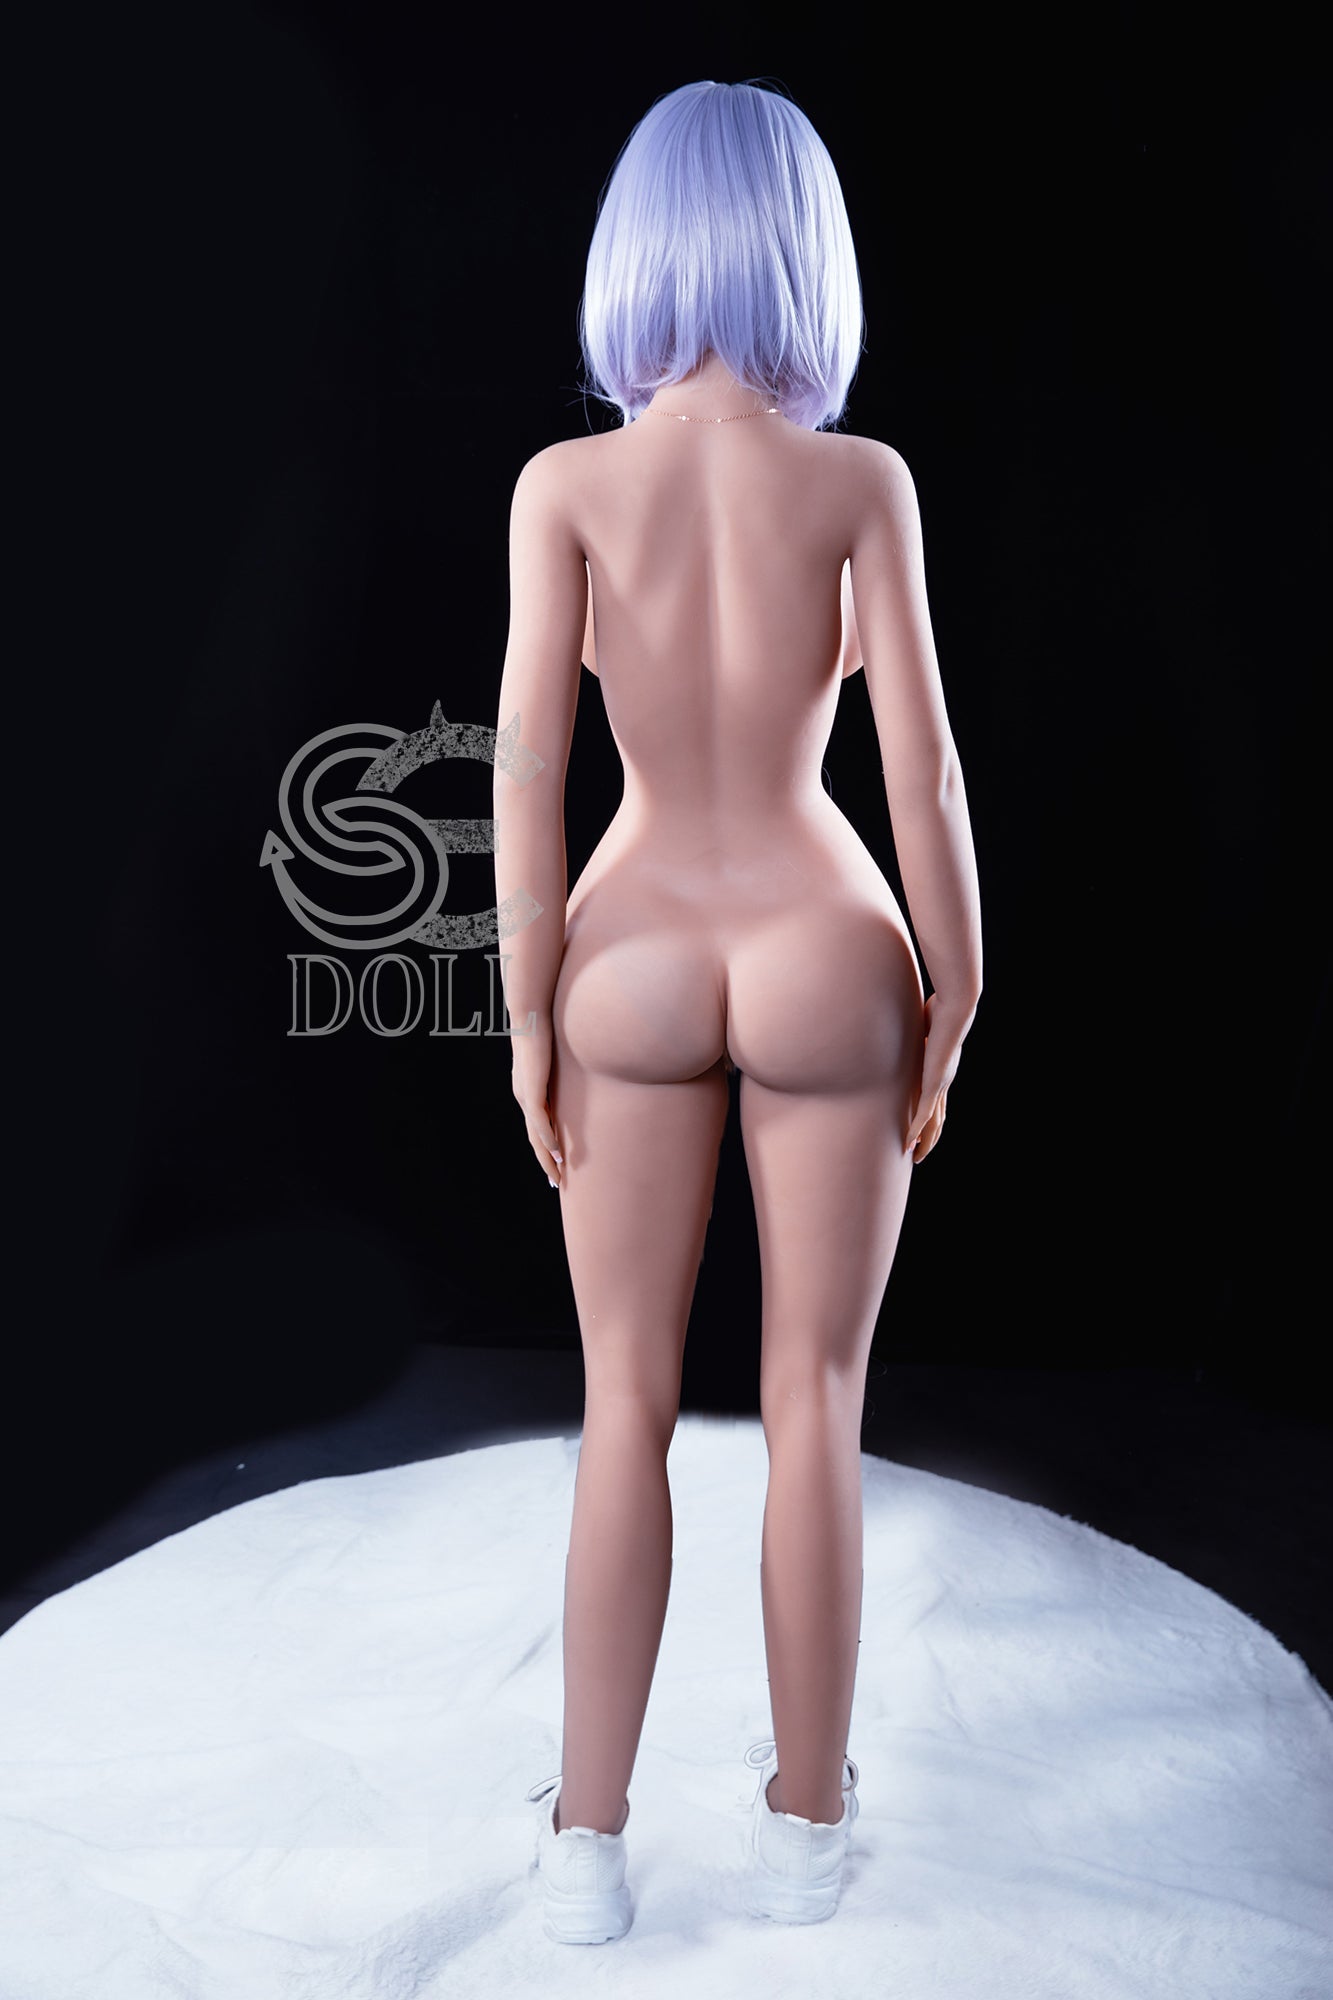 SEDOLL 161 cm F TPE - Rita (USA) | Buy Sex Dolls at DOLLS ACTUALLY